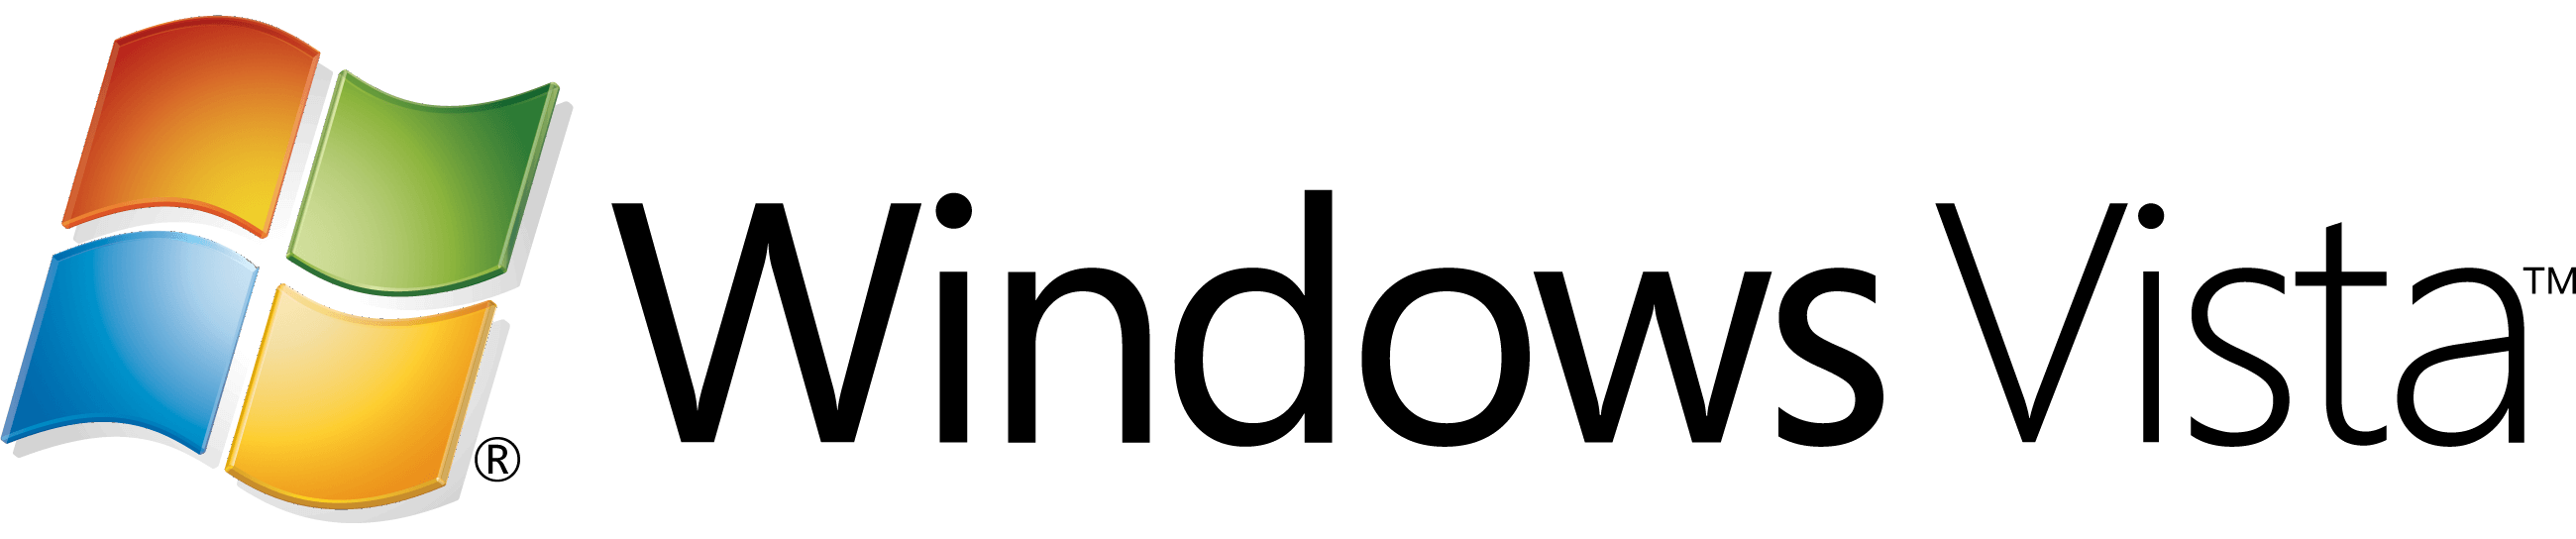 Vista Logo - Image - Windows Vista logo.png | Logopedia | FANDOM powered by Wikia